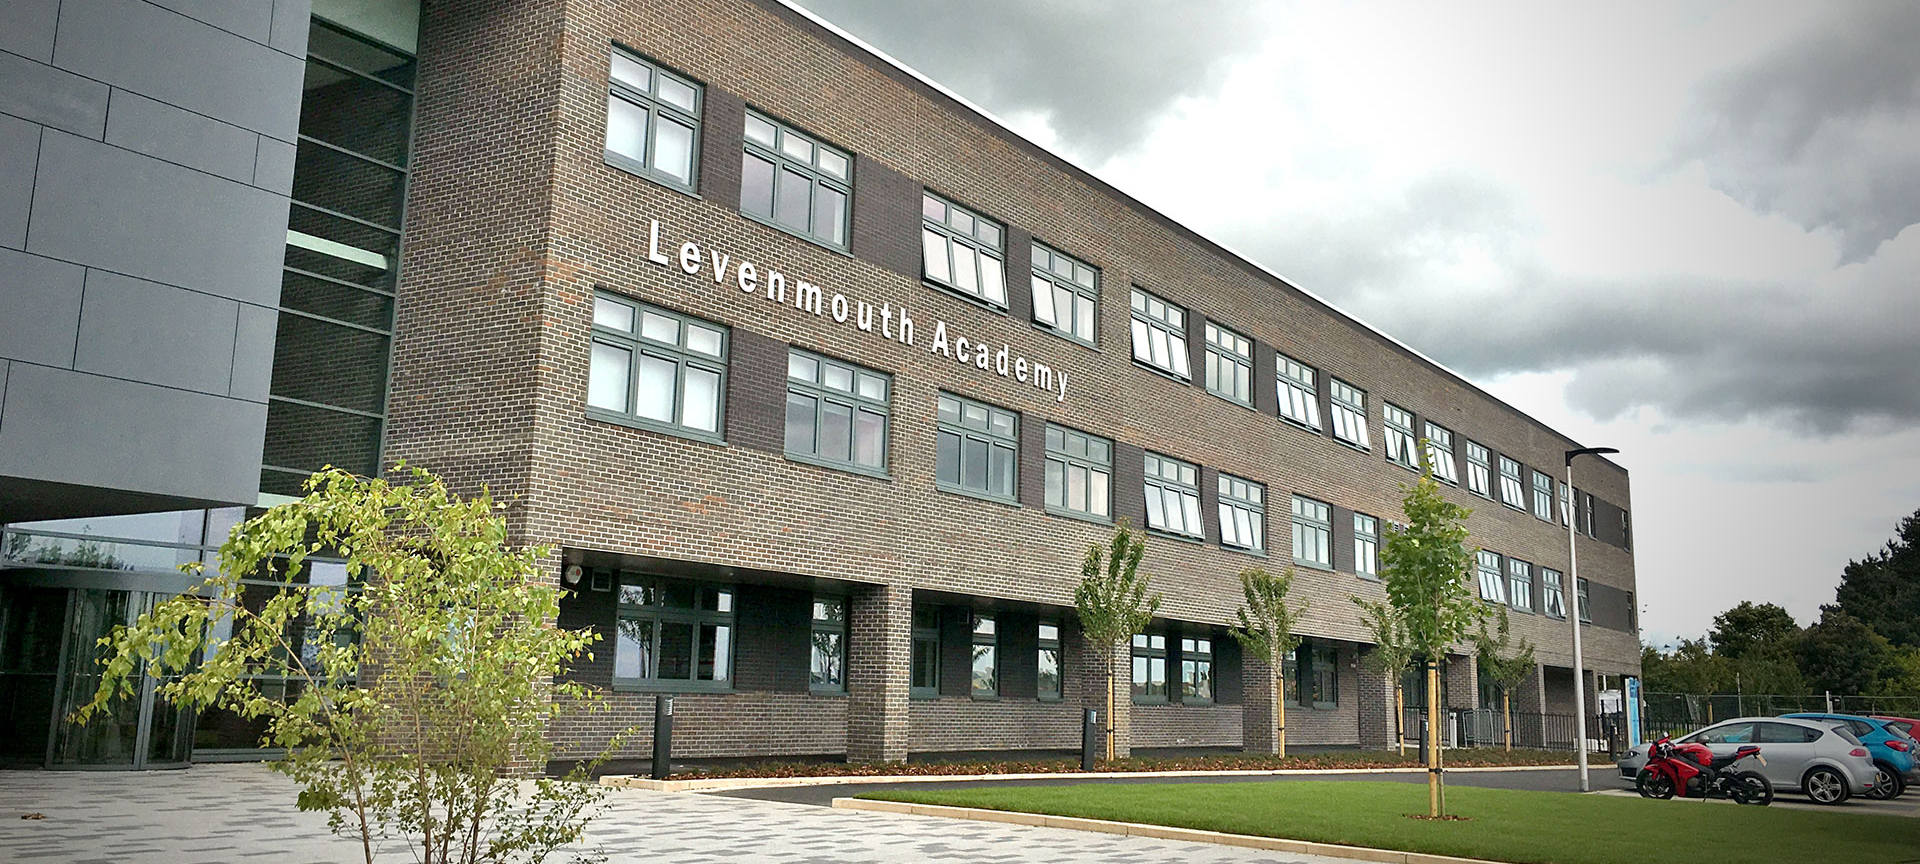 <p>Levenmouth Academy</p>
